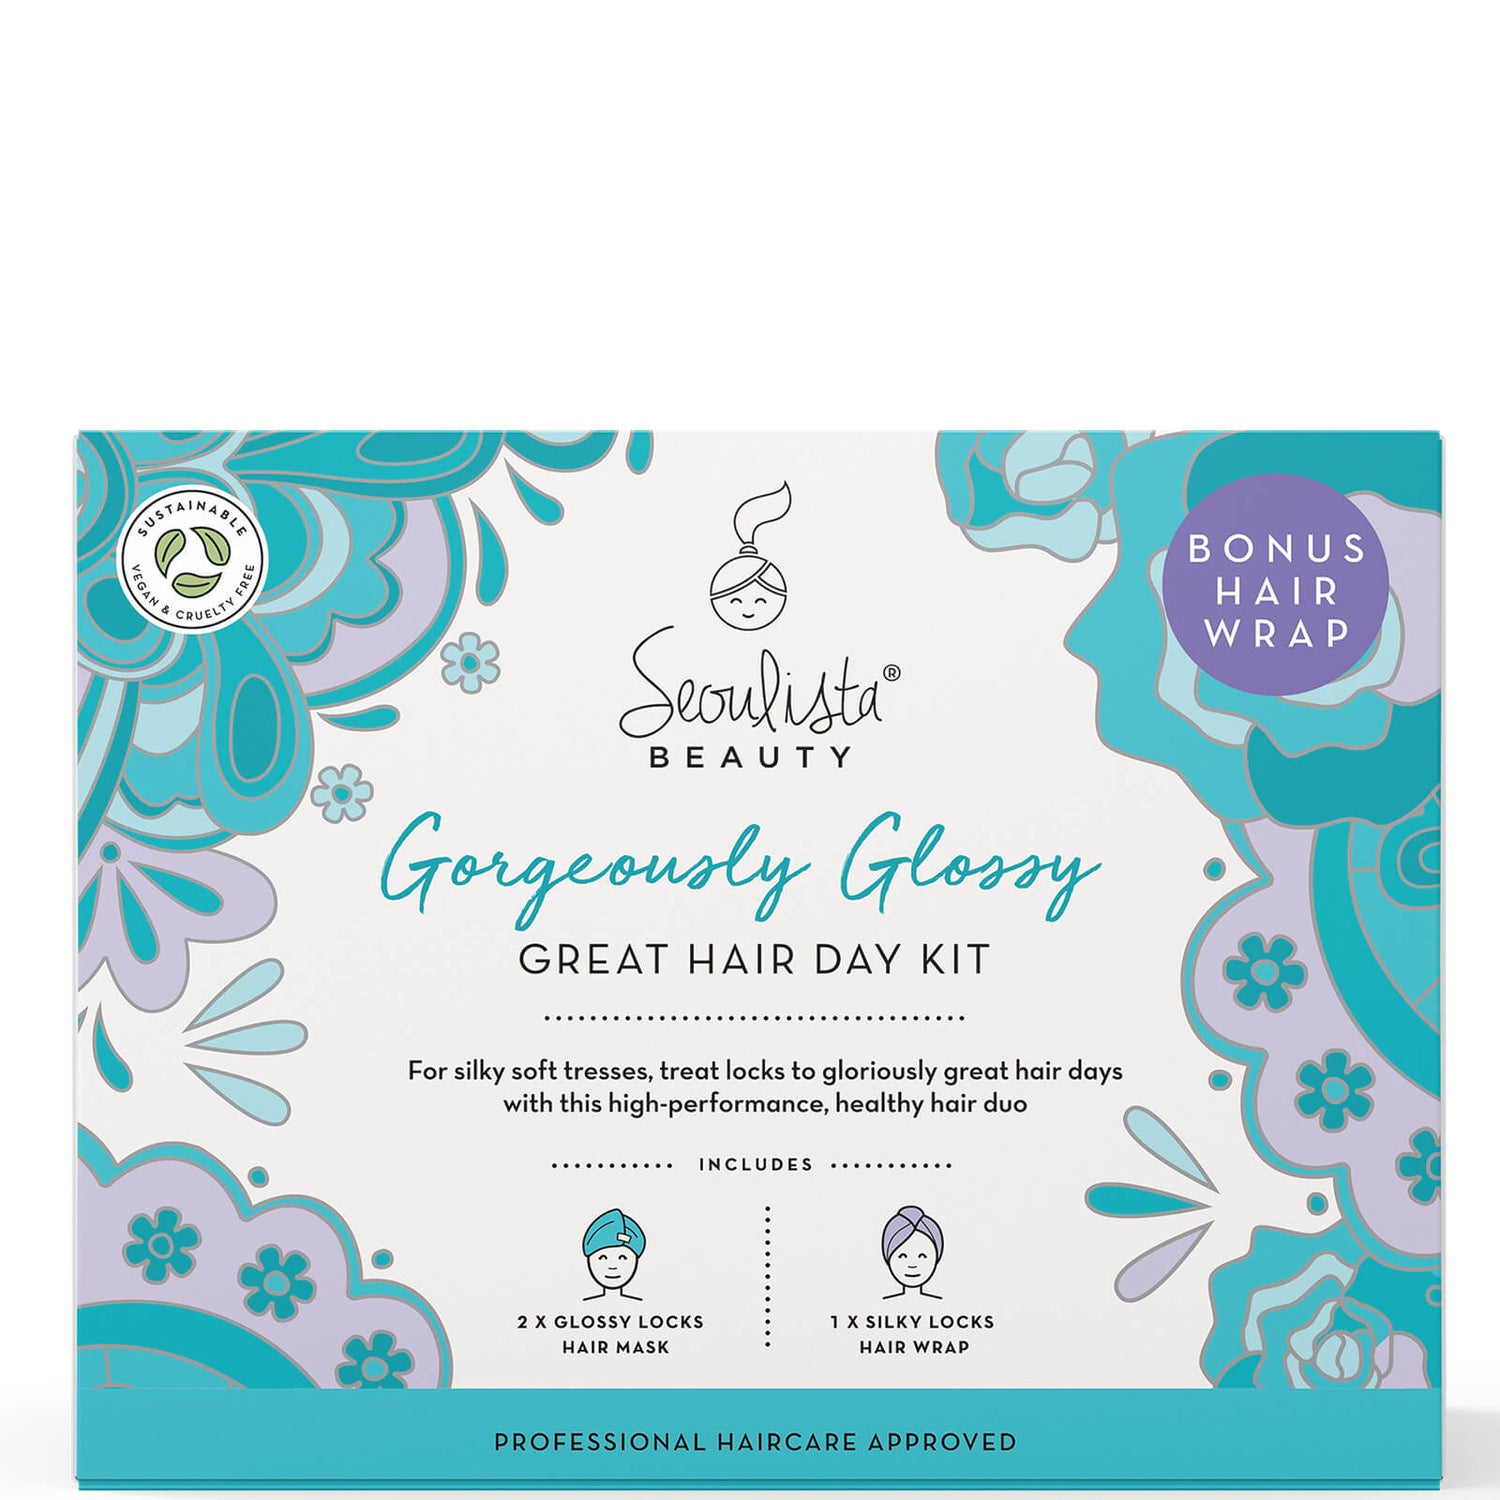 Seoulista Beauty Gorgeously Glossy Great Hair Day Kit(서울리스타 뷰티 고저슬리 글로시 그레이트 헤어 데이 키트)